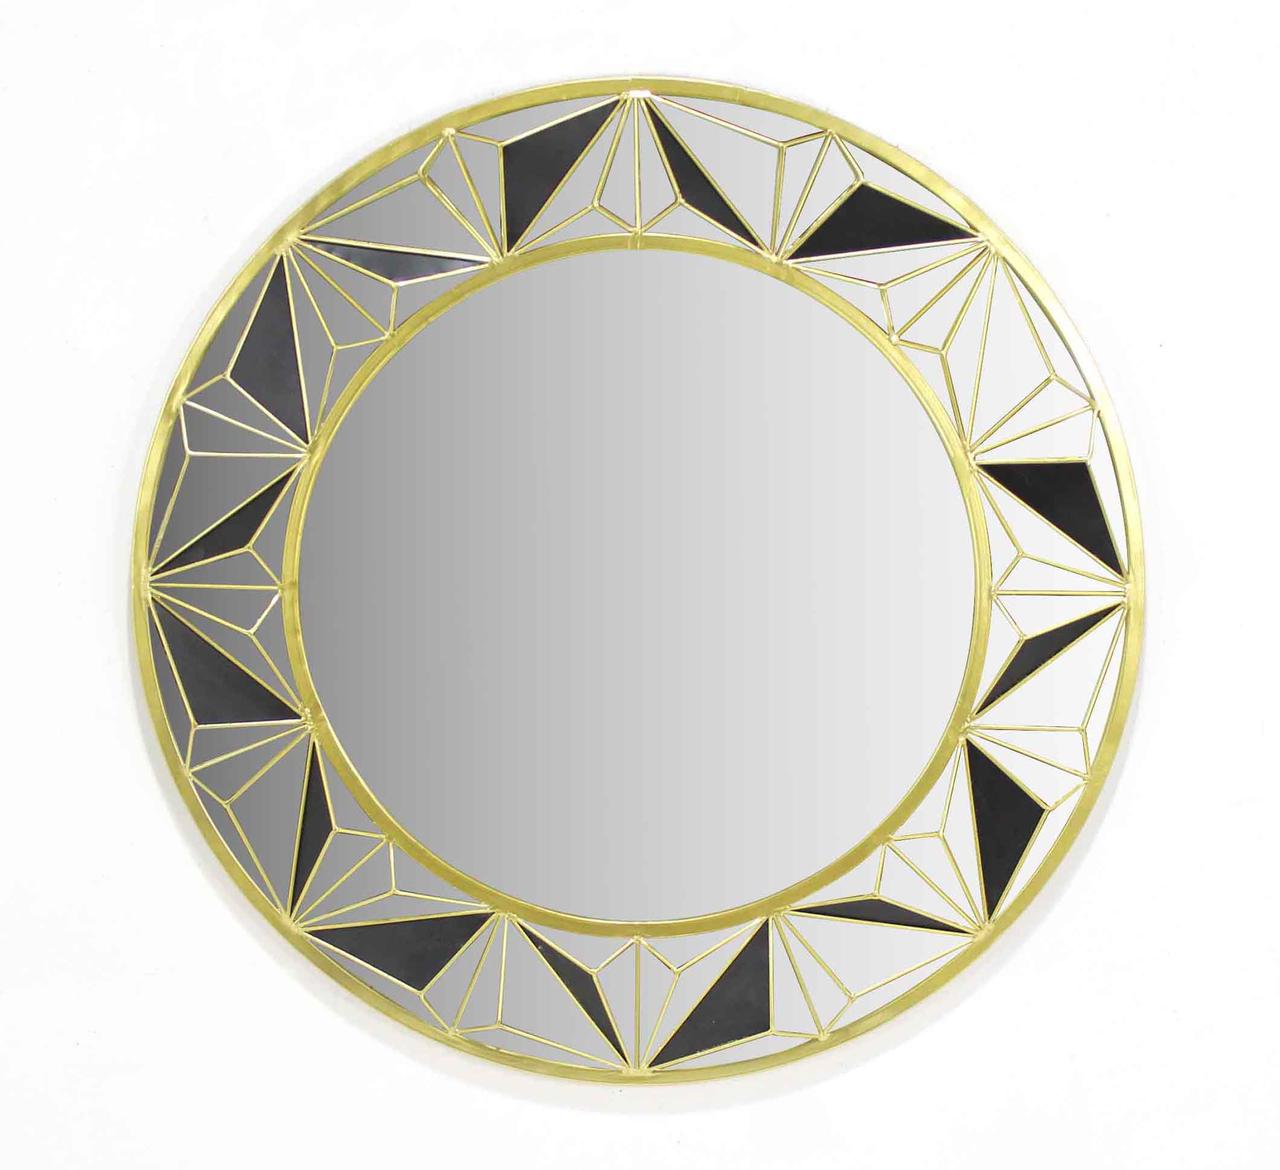 Стильне кругле красиве дзеркало золоте металеве у вітальню